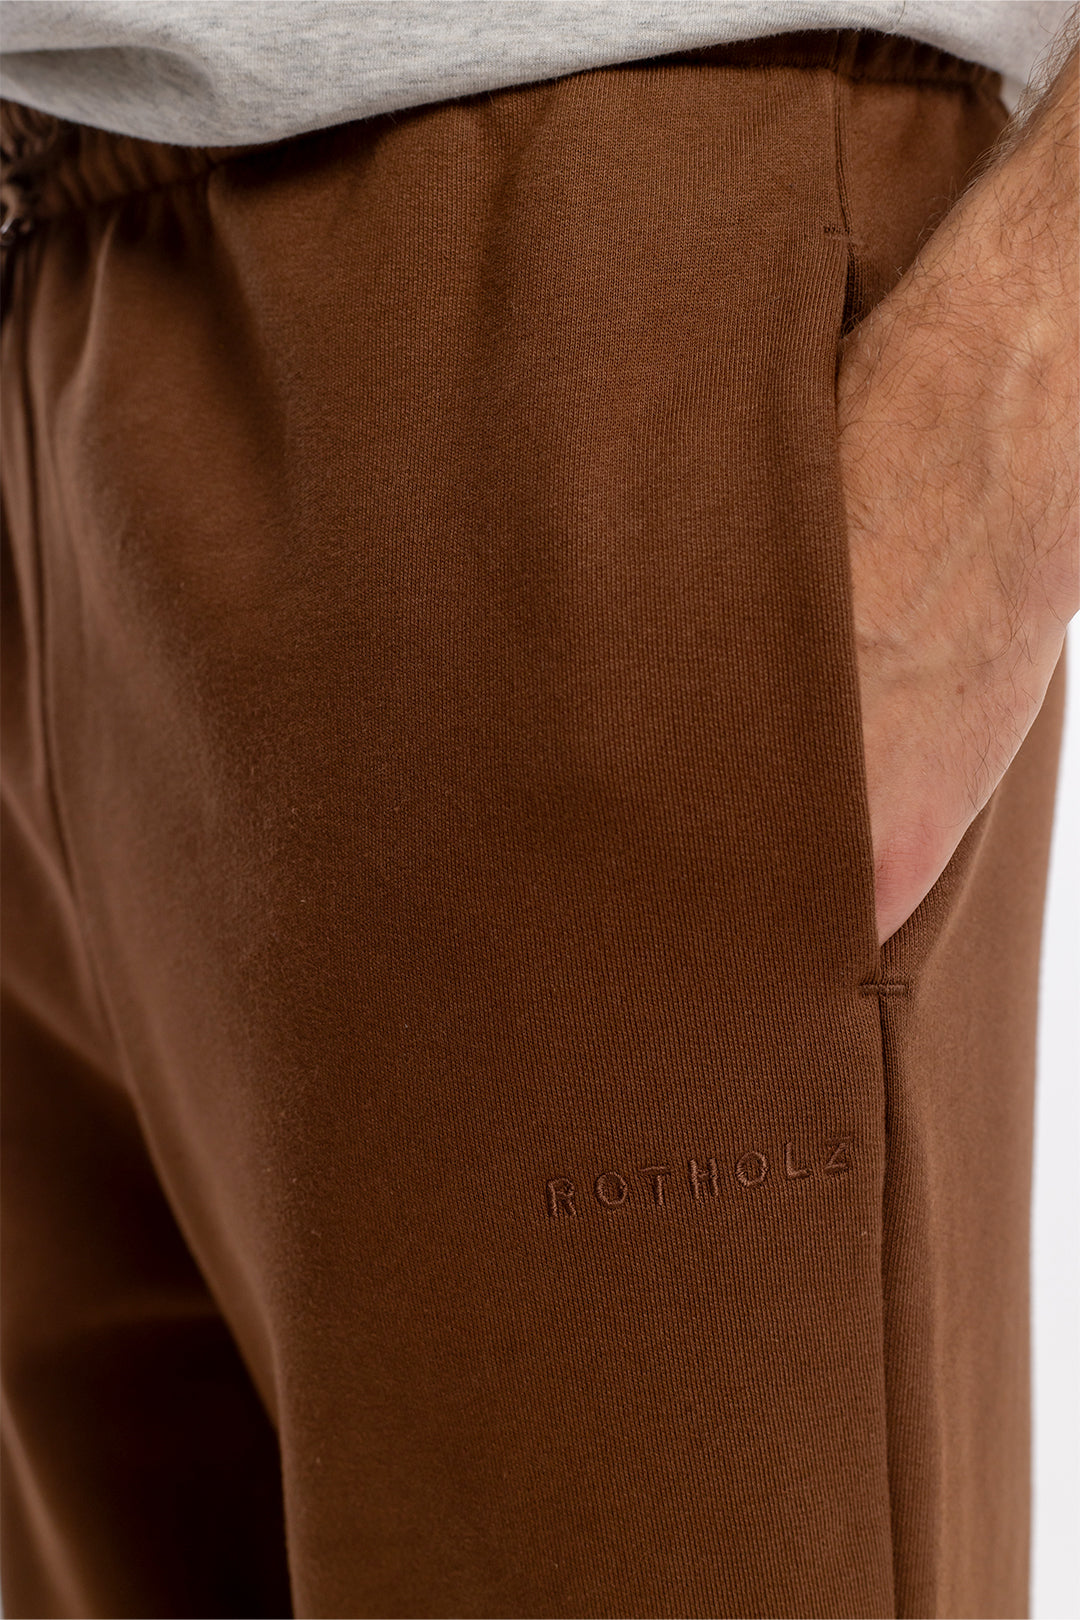 Dark brown logo jogging pants made of organic cotton by Rotholz